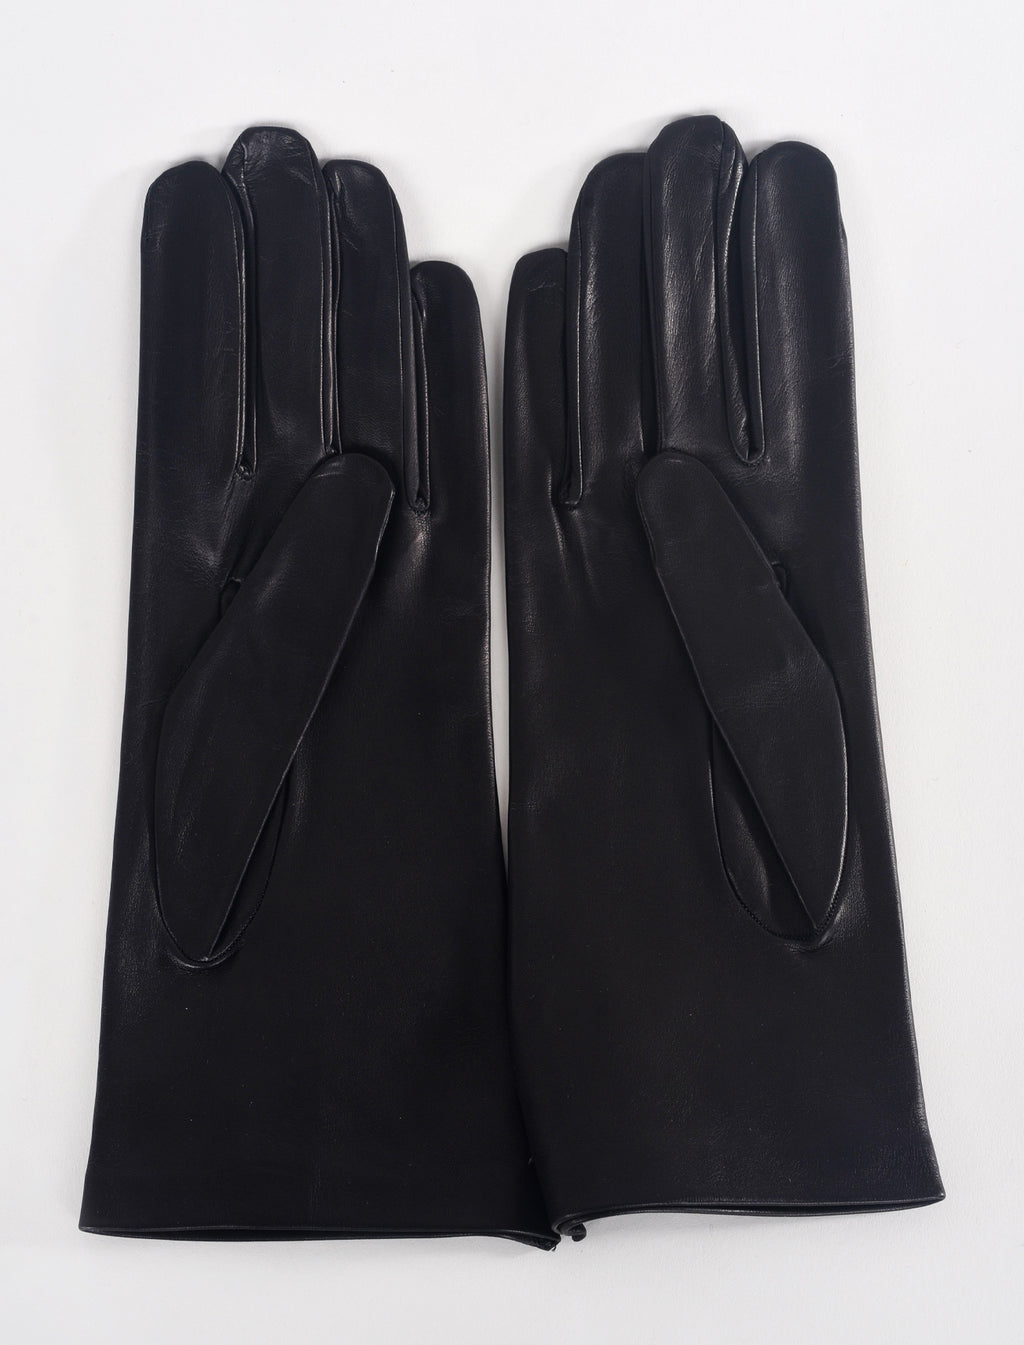 Santacana Madrid Lambskin Gloves, Black 